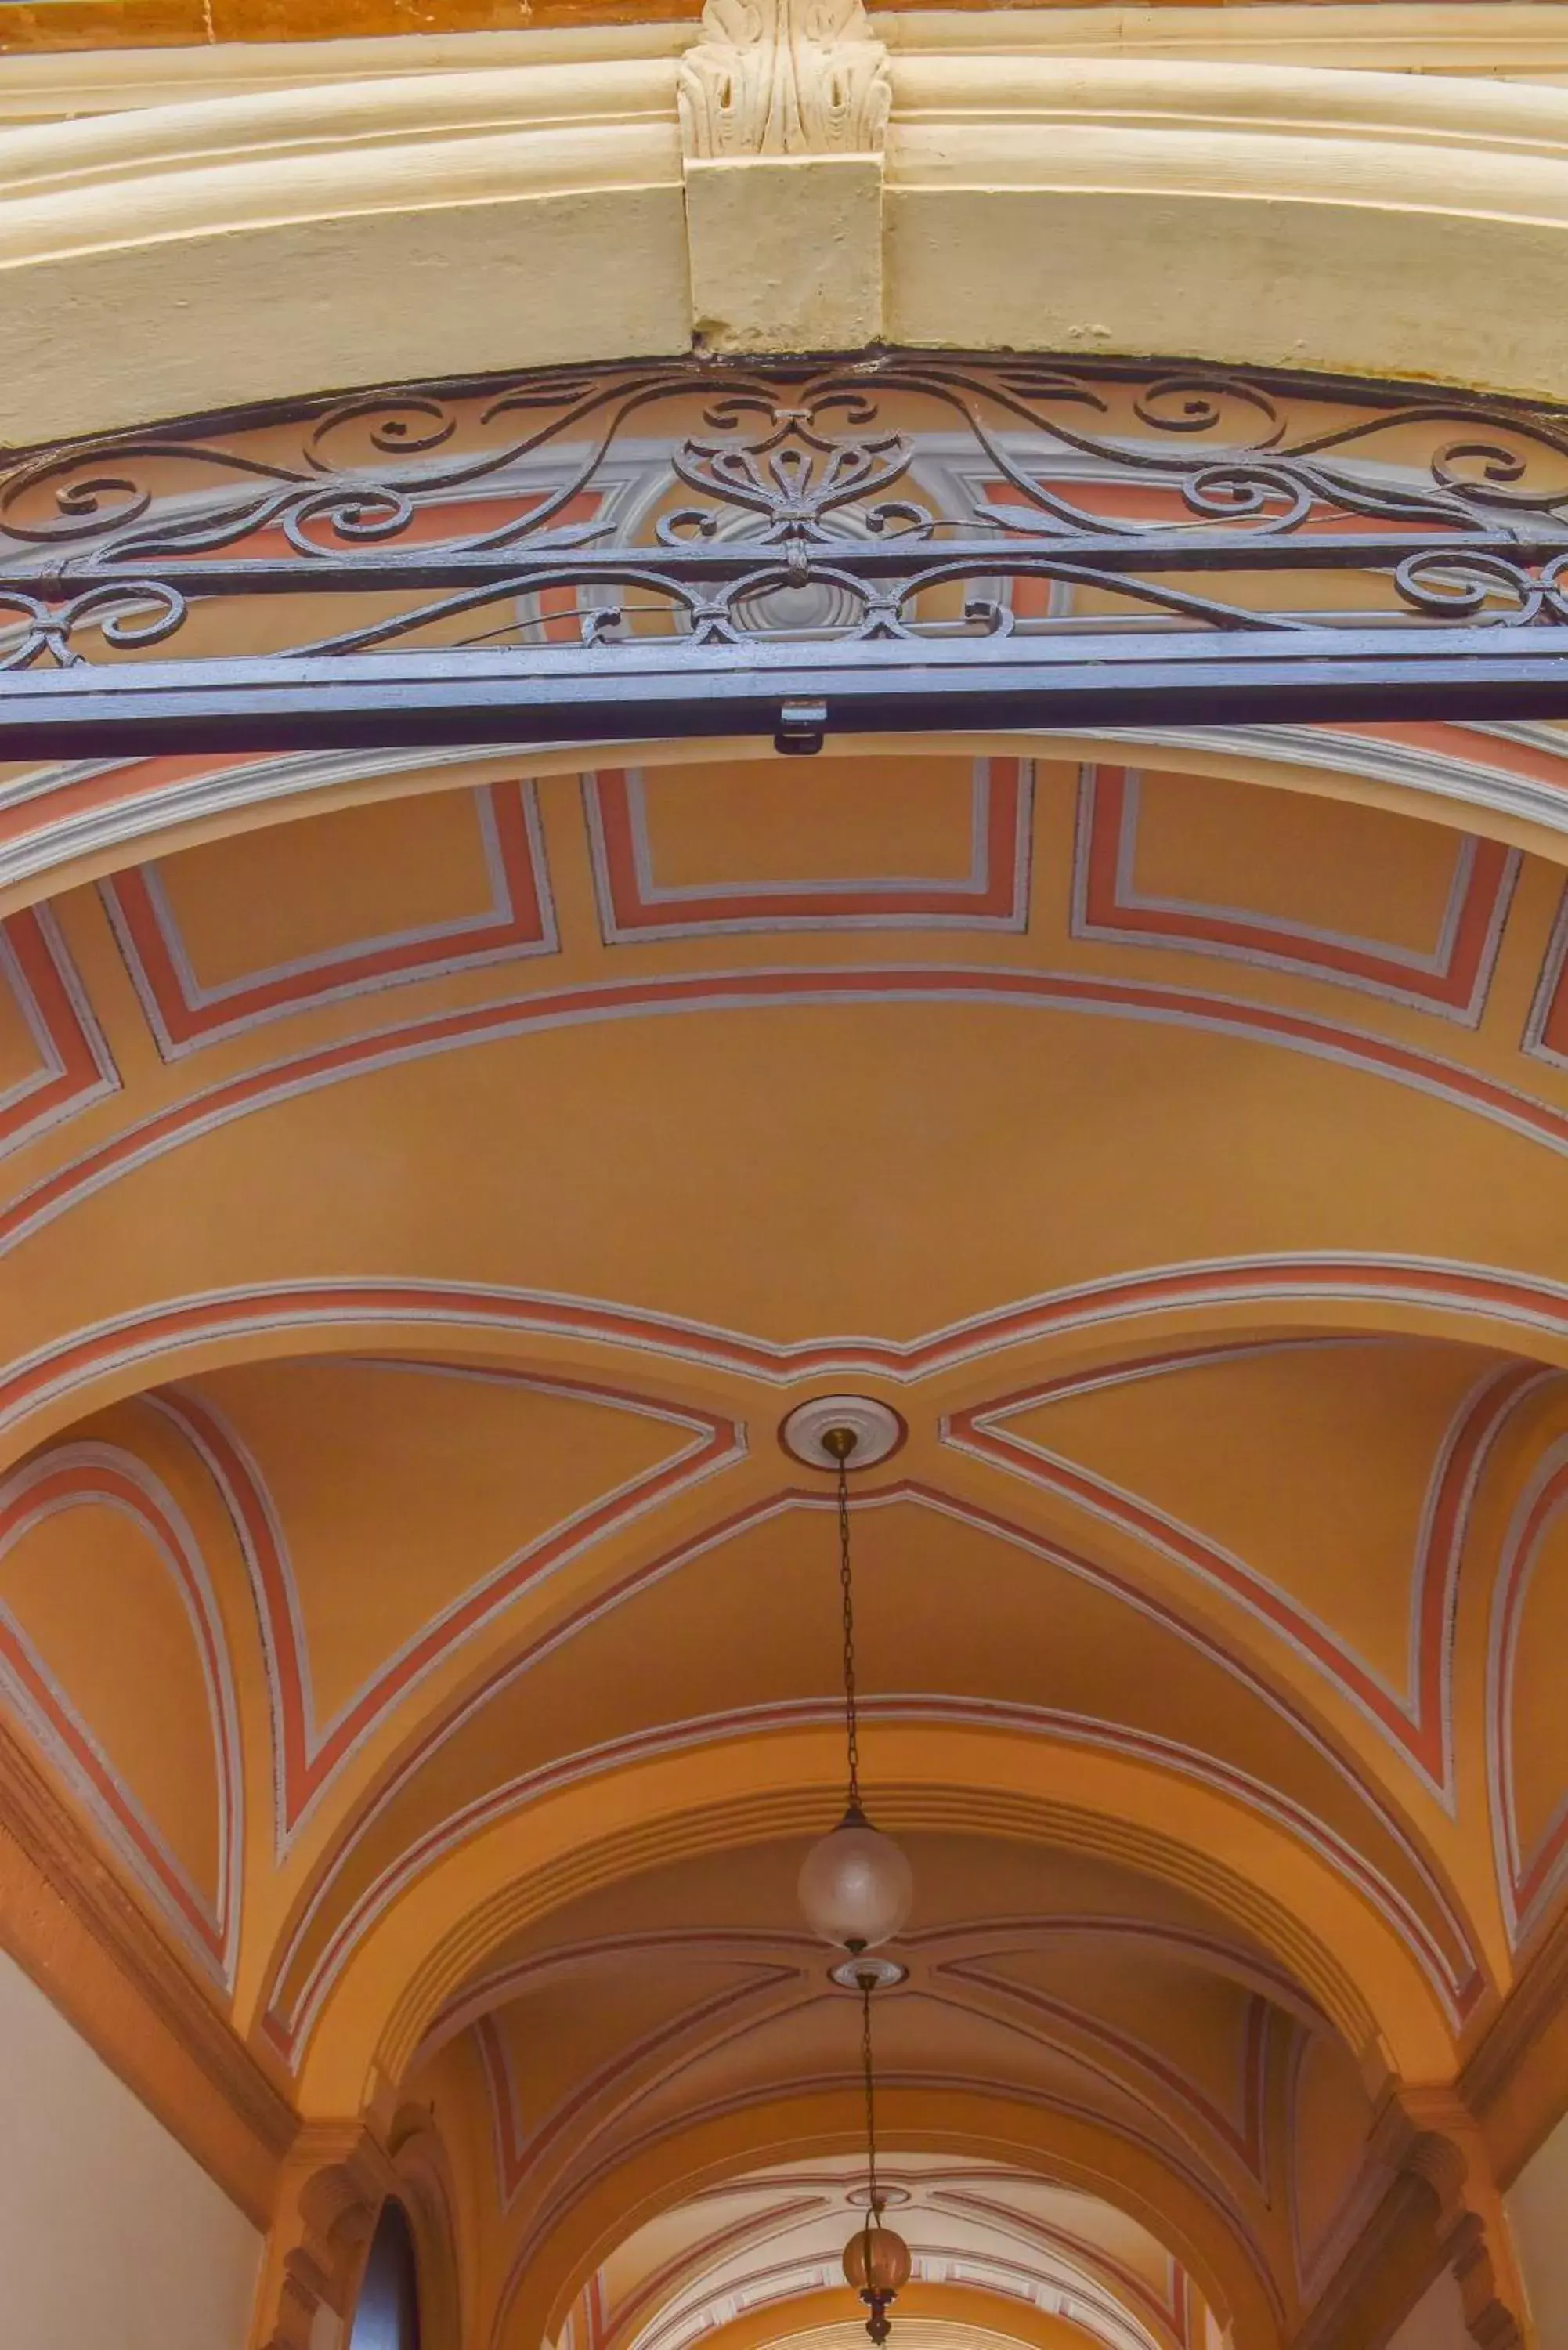 Facade/entrance in Palazzo degli Affreschi